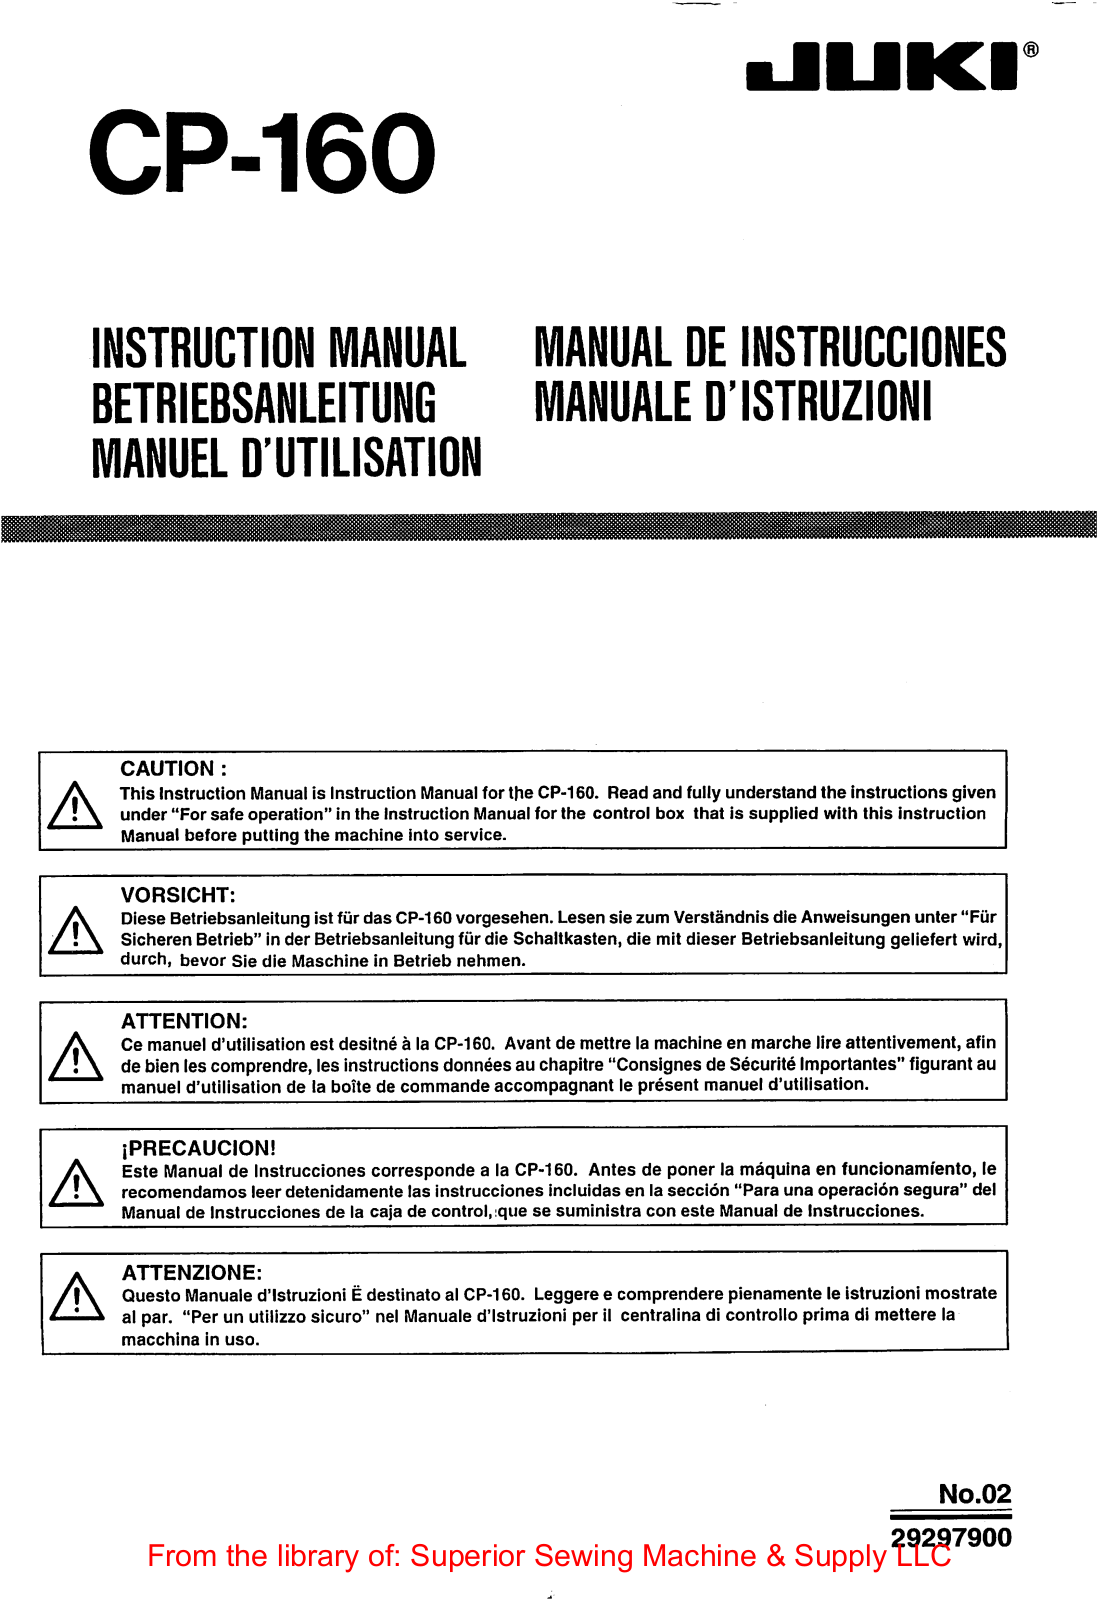 Juki CP-160 Instruction Manual